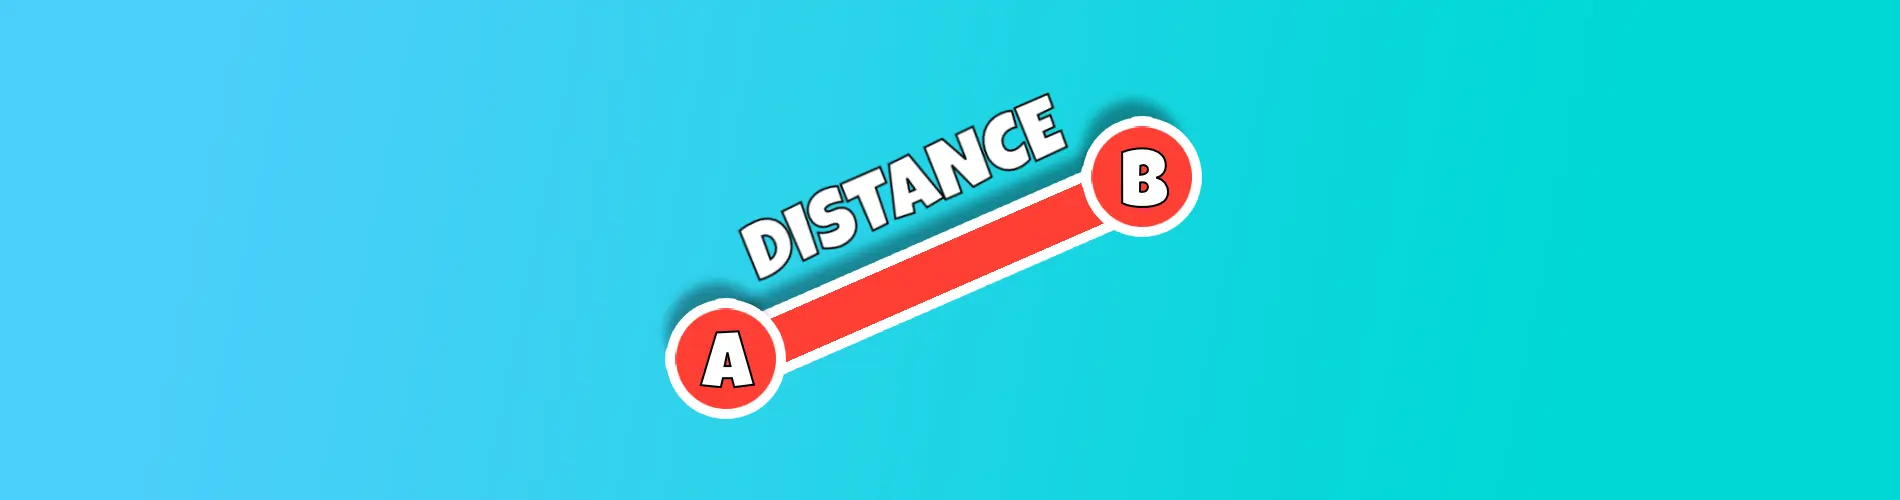 Unity distance